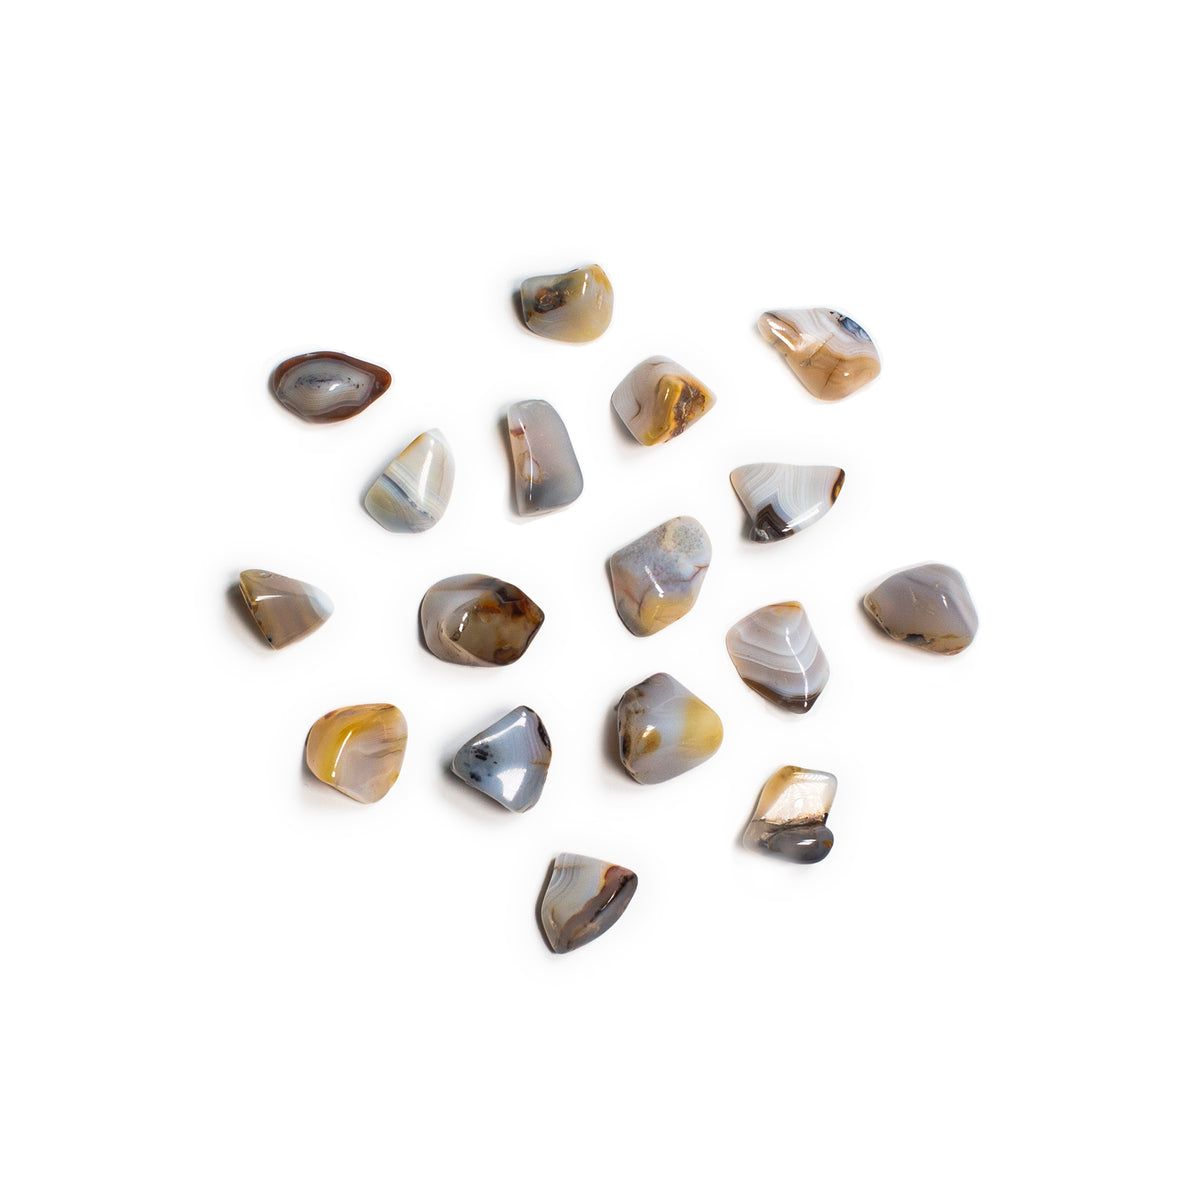 Dendrite Agate Stones